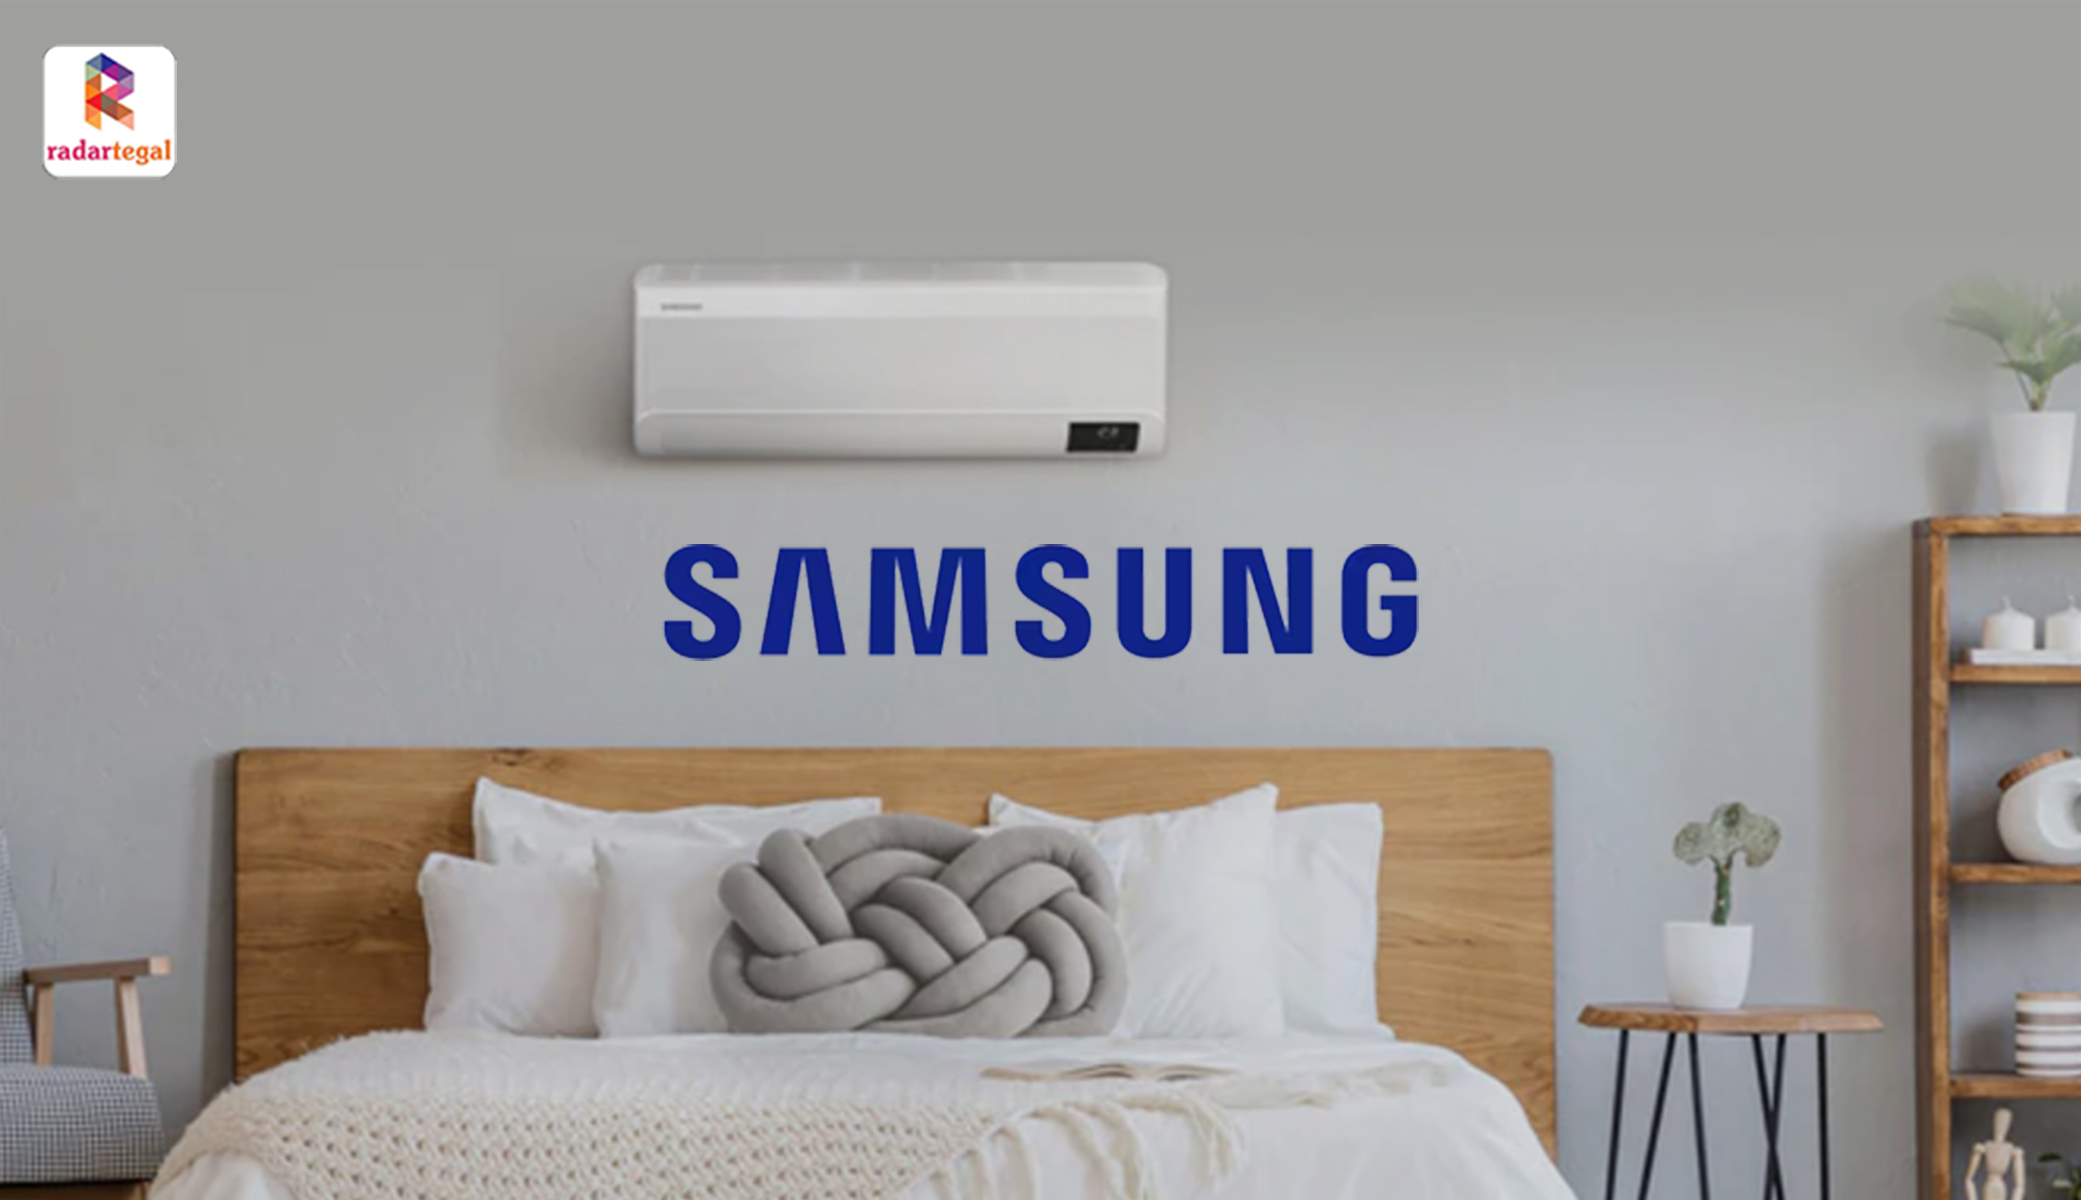 Keunggulan AC Dinding Samsung yang Membuatnya Laris di Pasar Elektronik